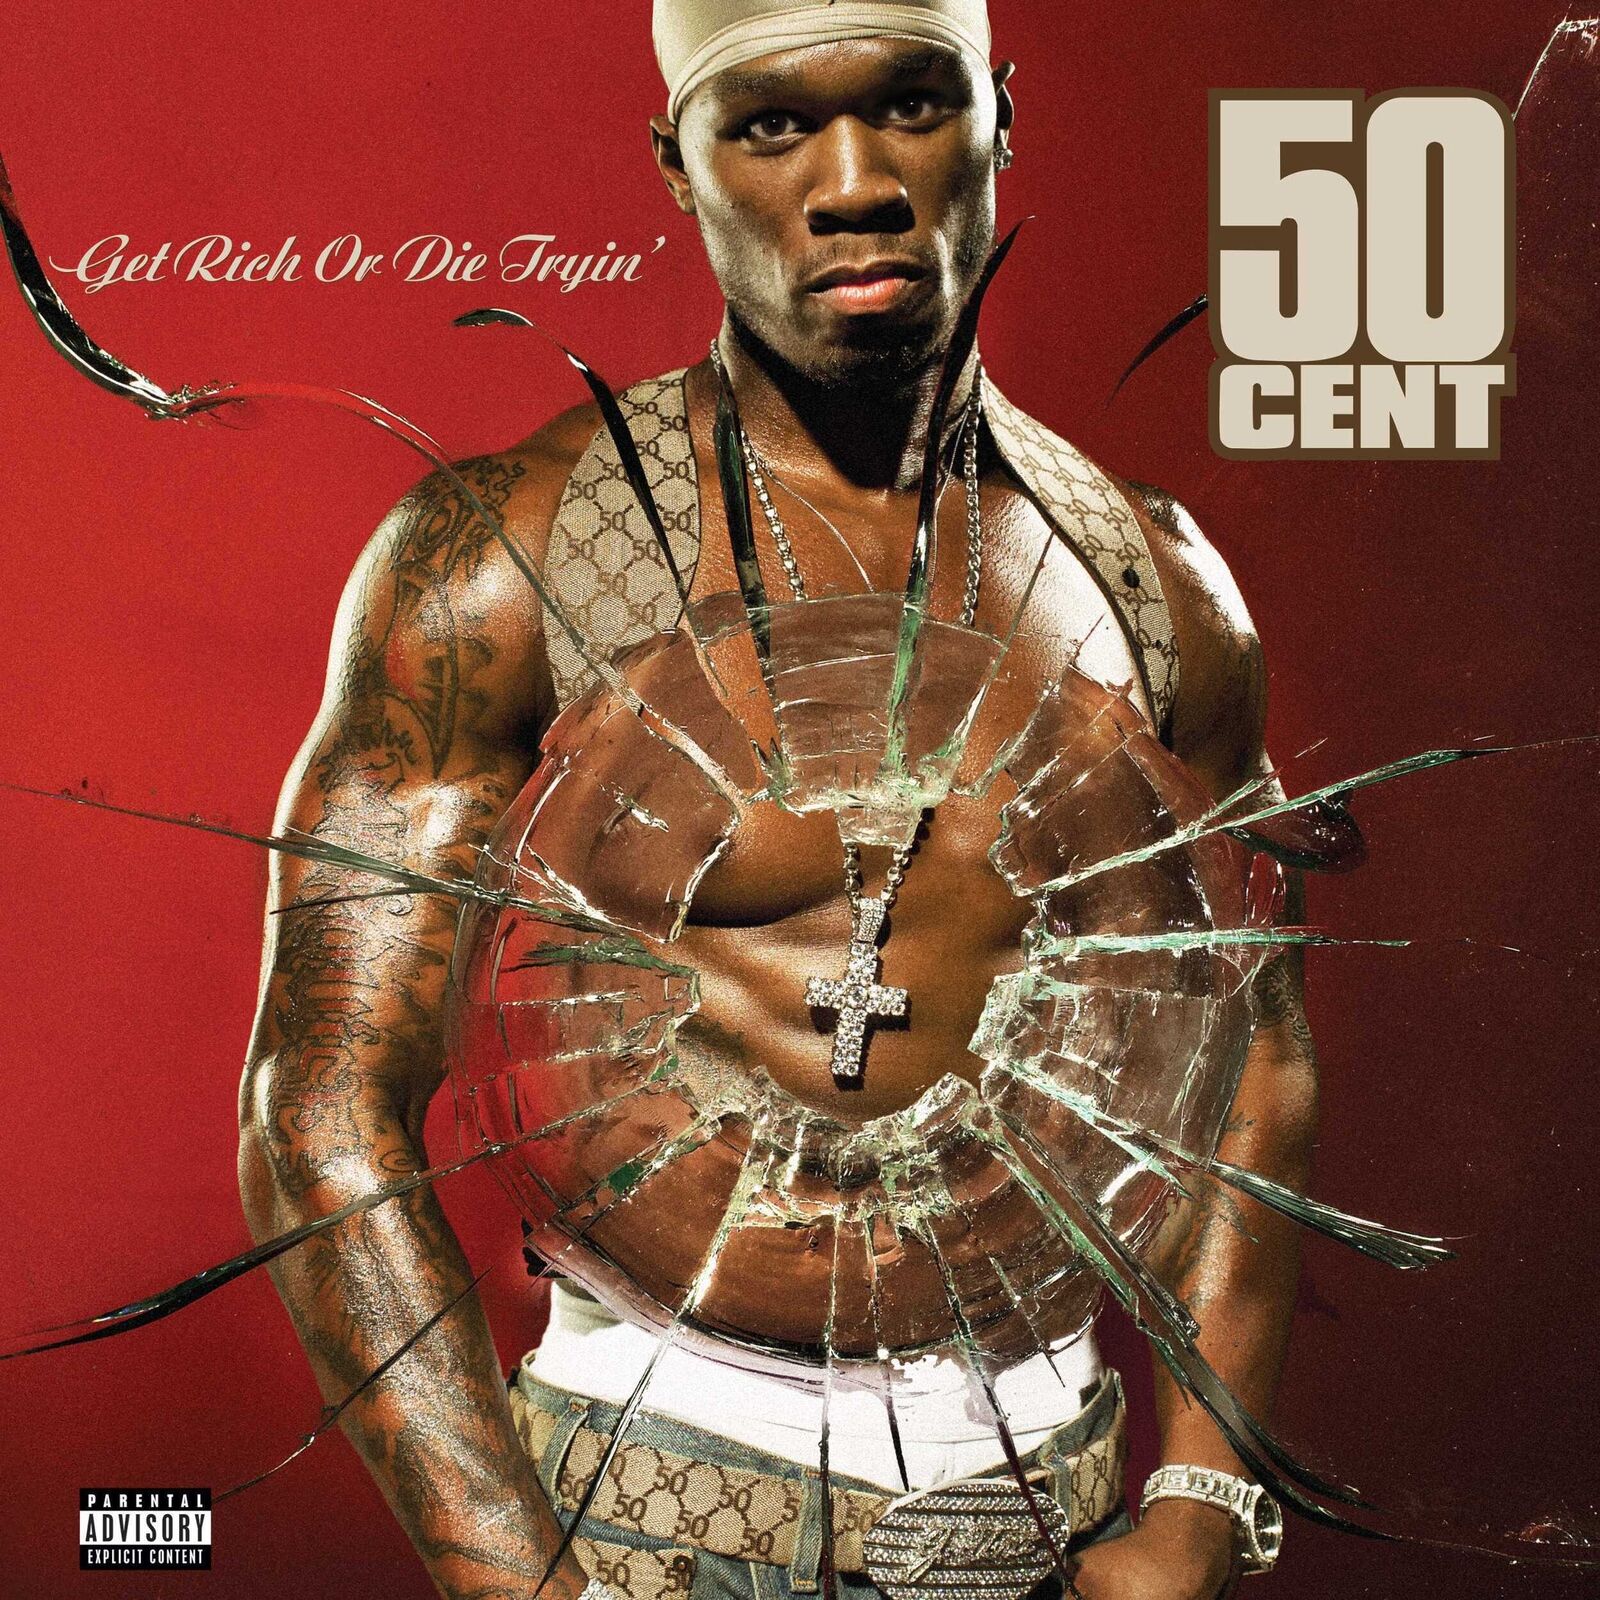 50 Cent "Get Rich Or Die Tryin'"